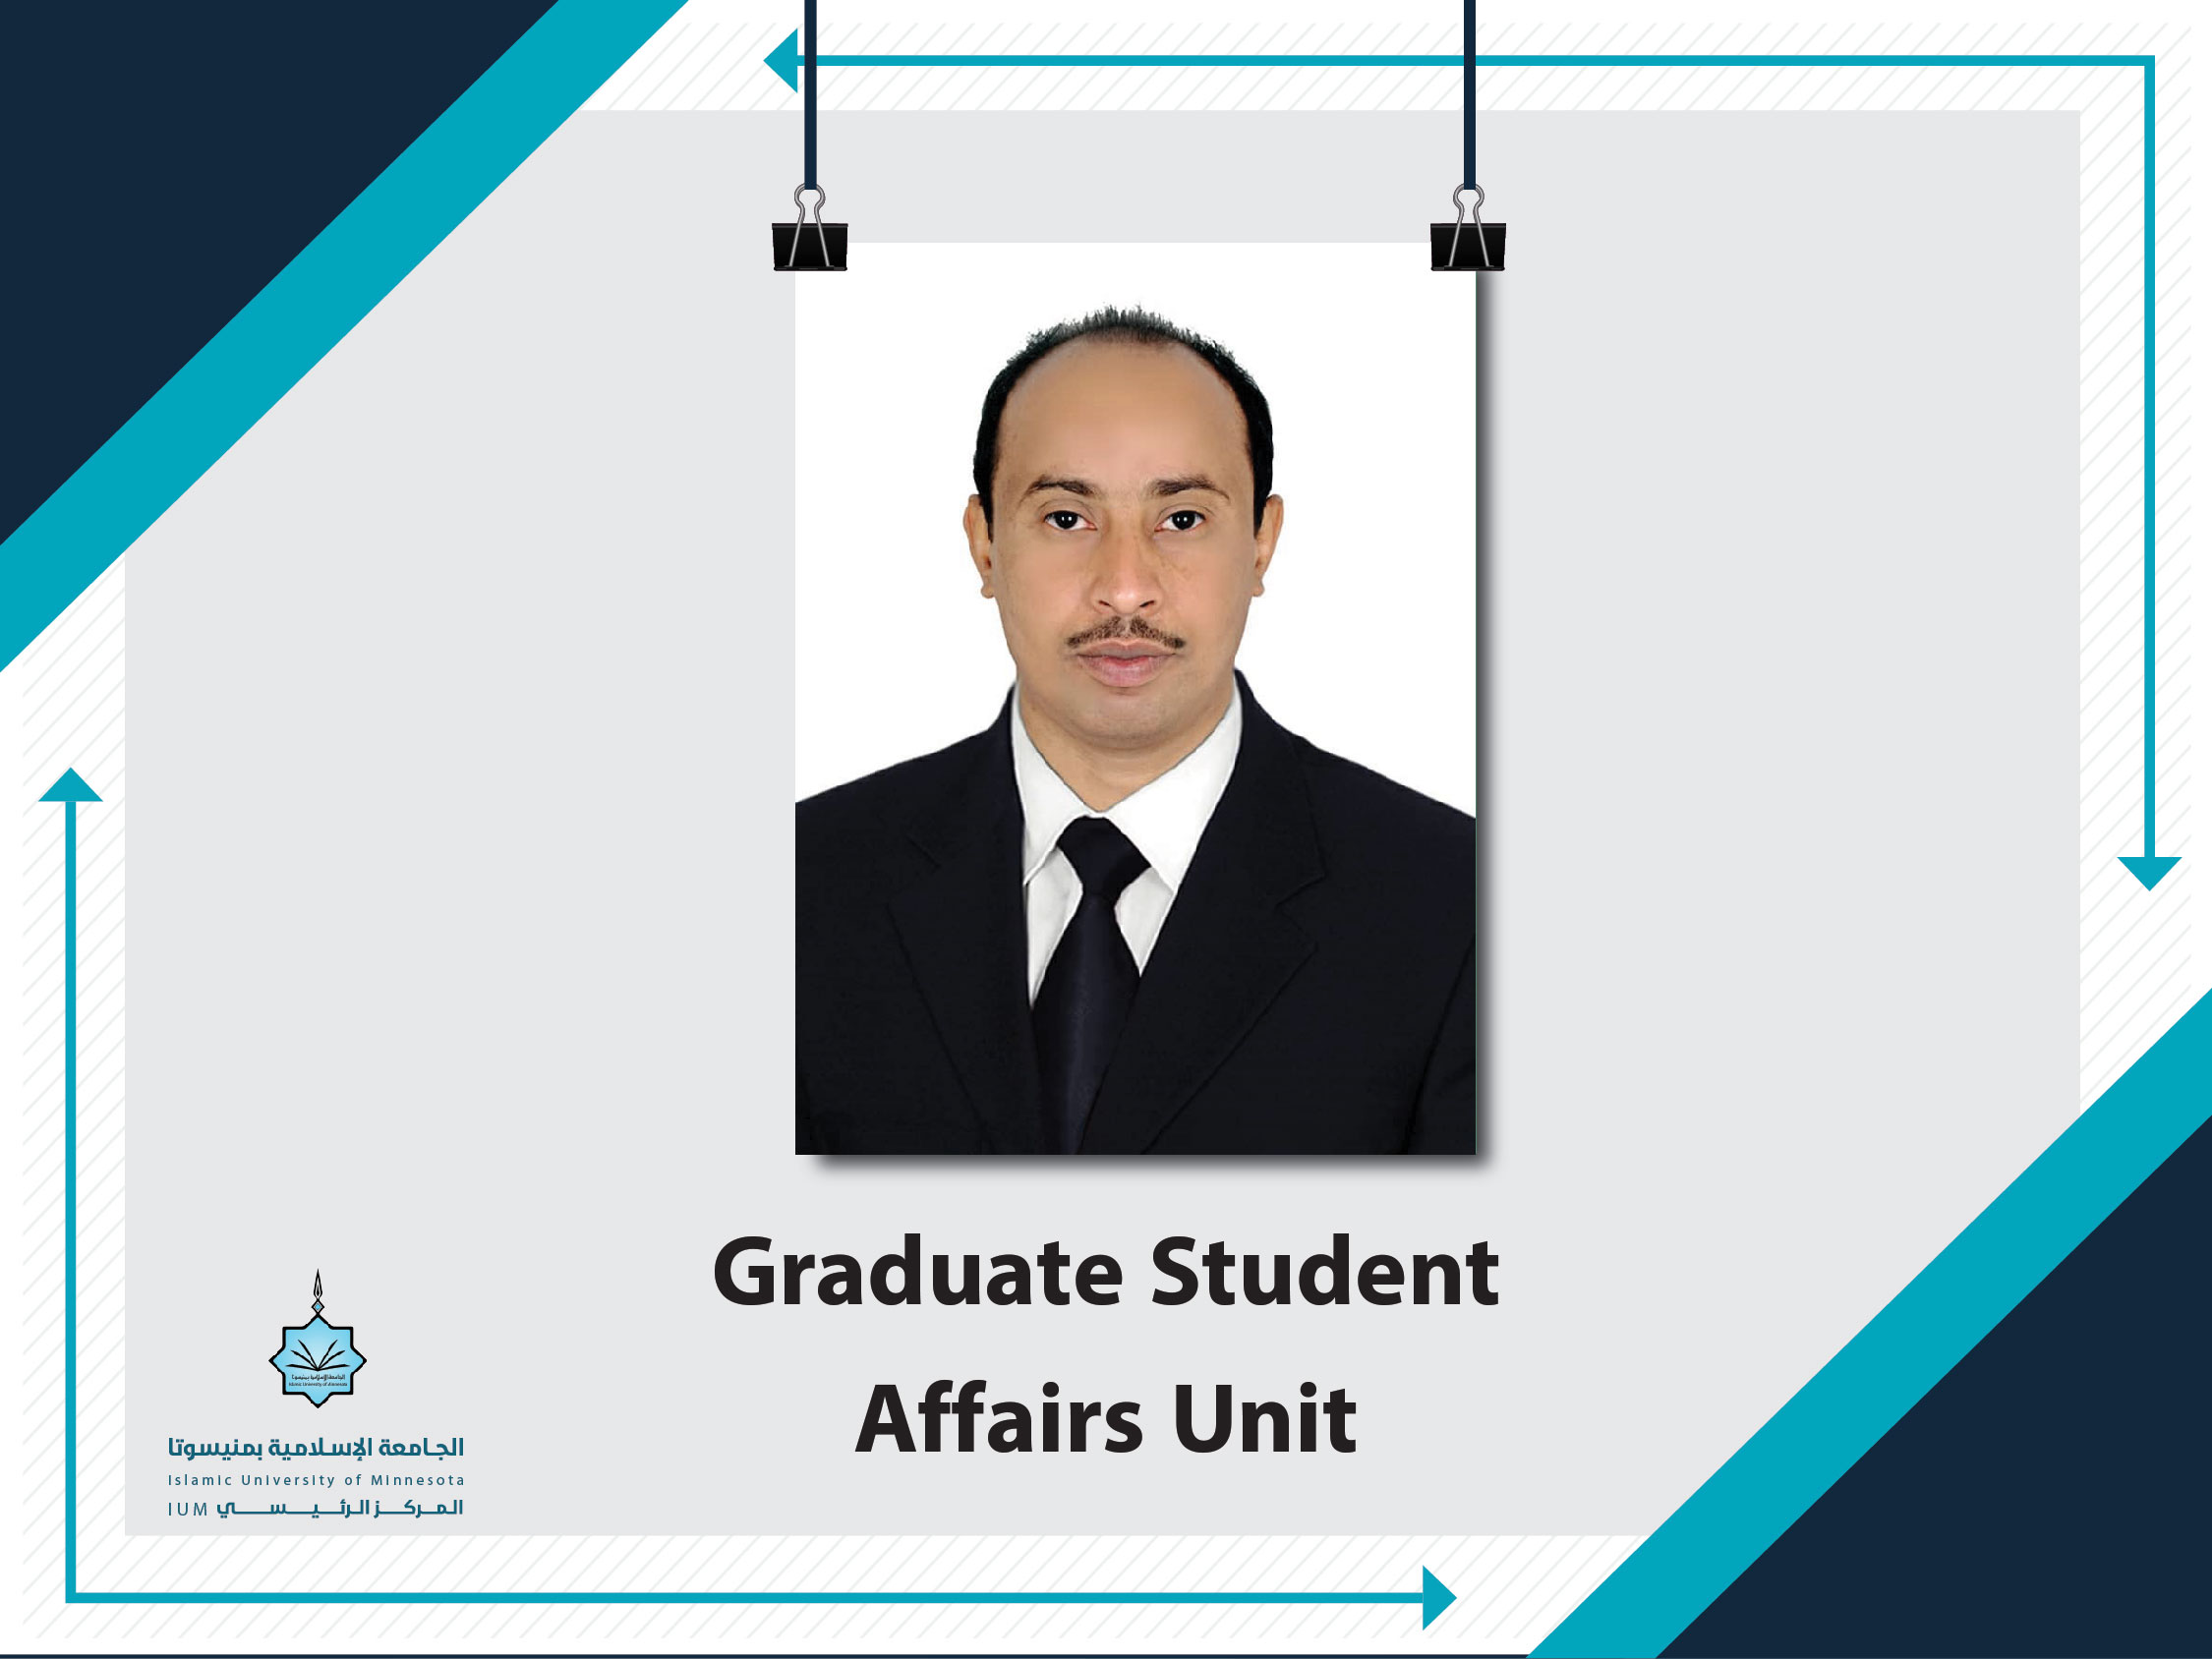 Graduate Student Affairs Unit